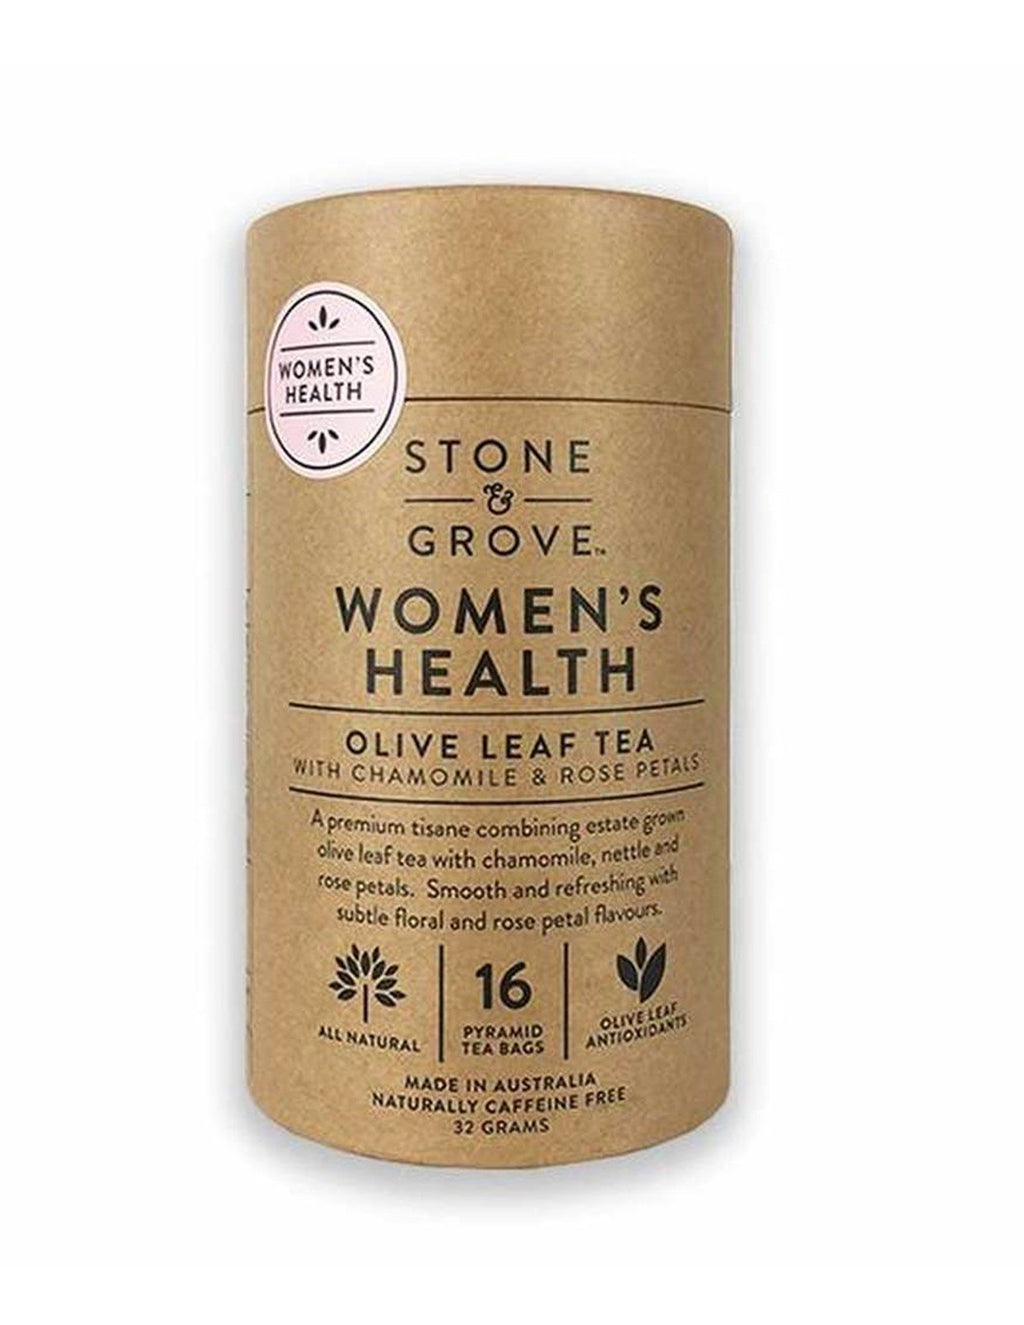 Stone and Grove Women's Health